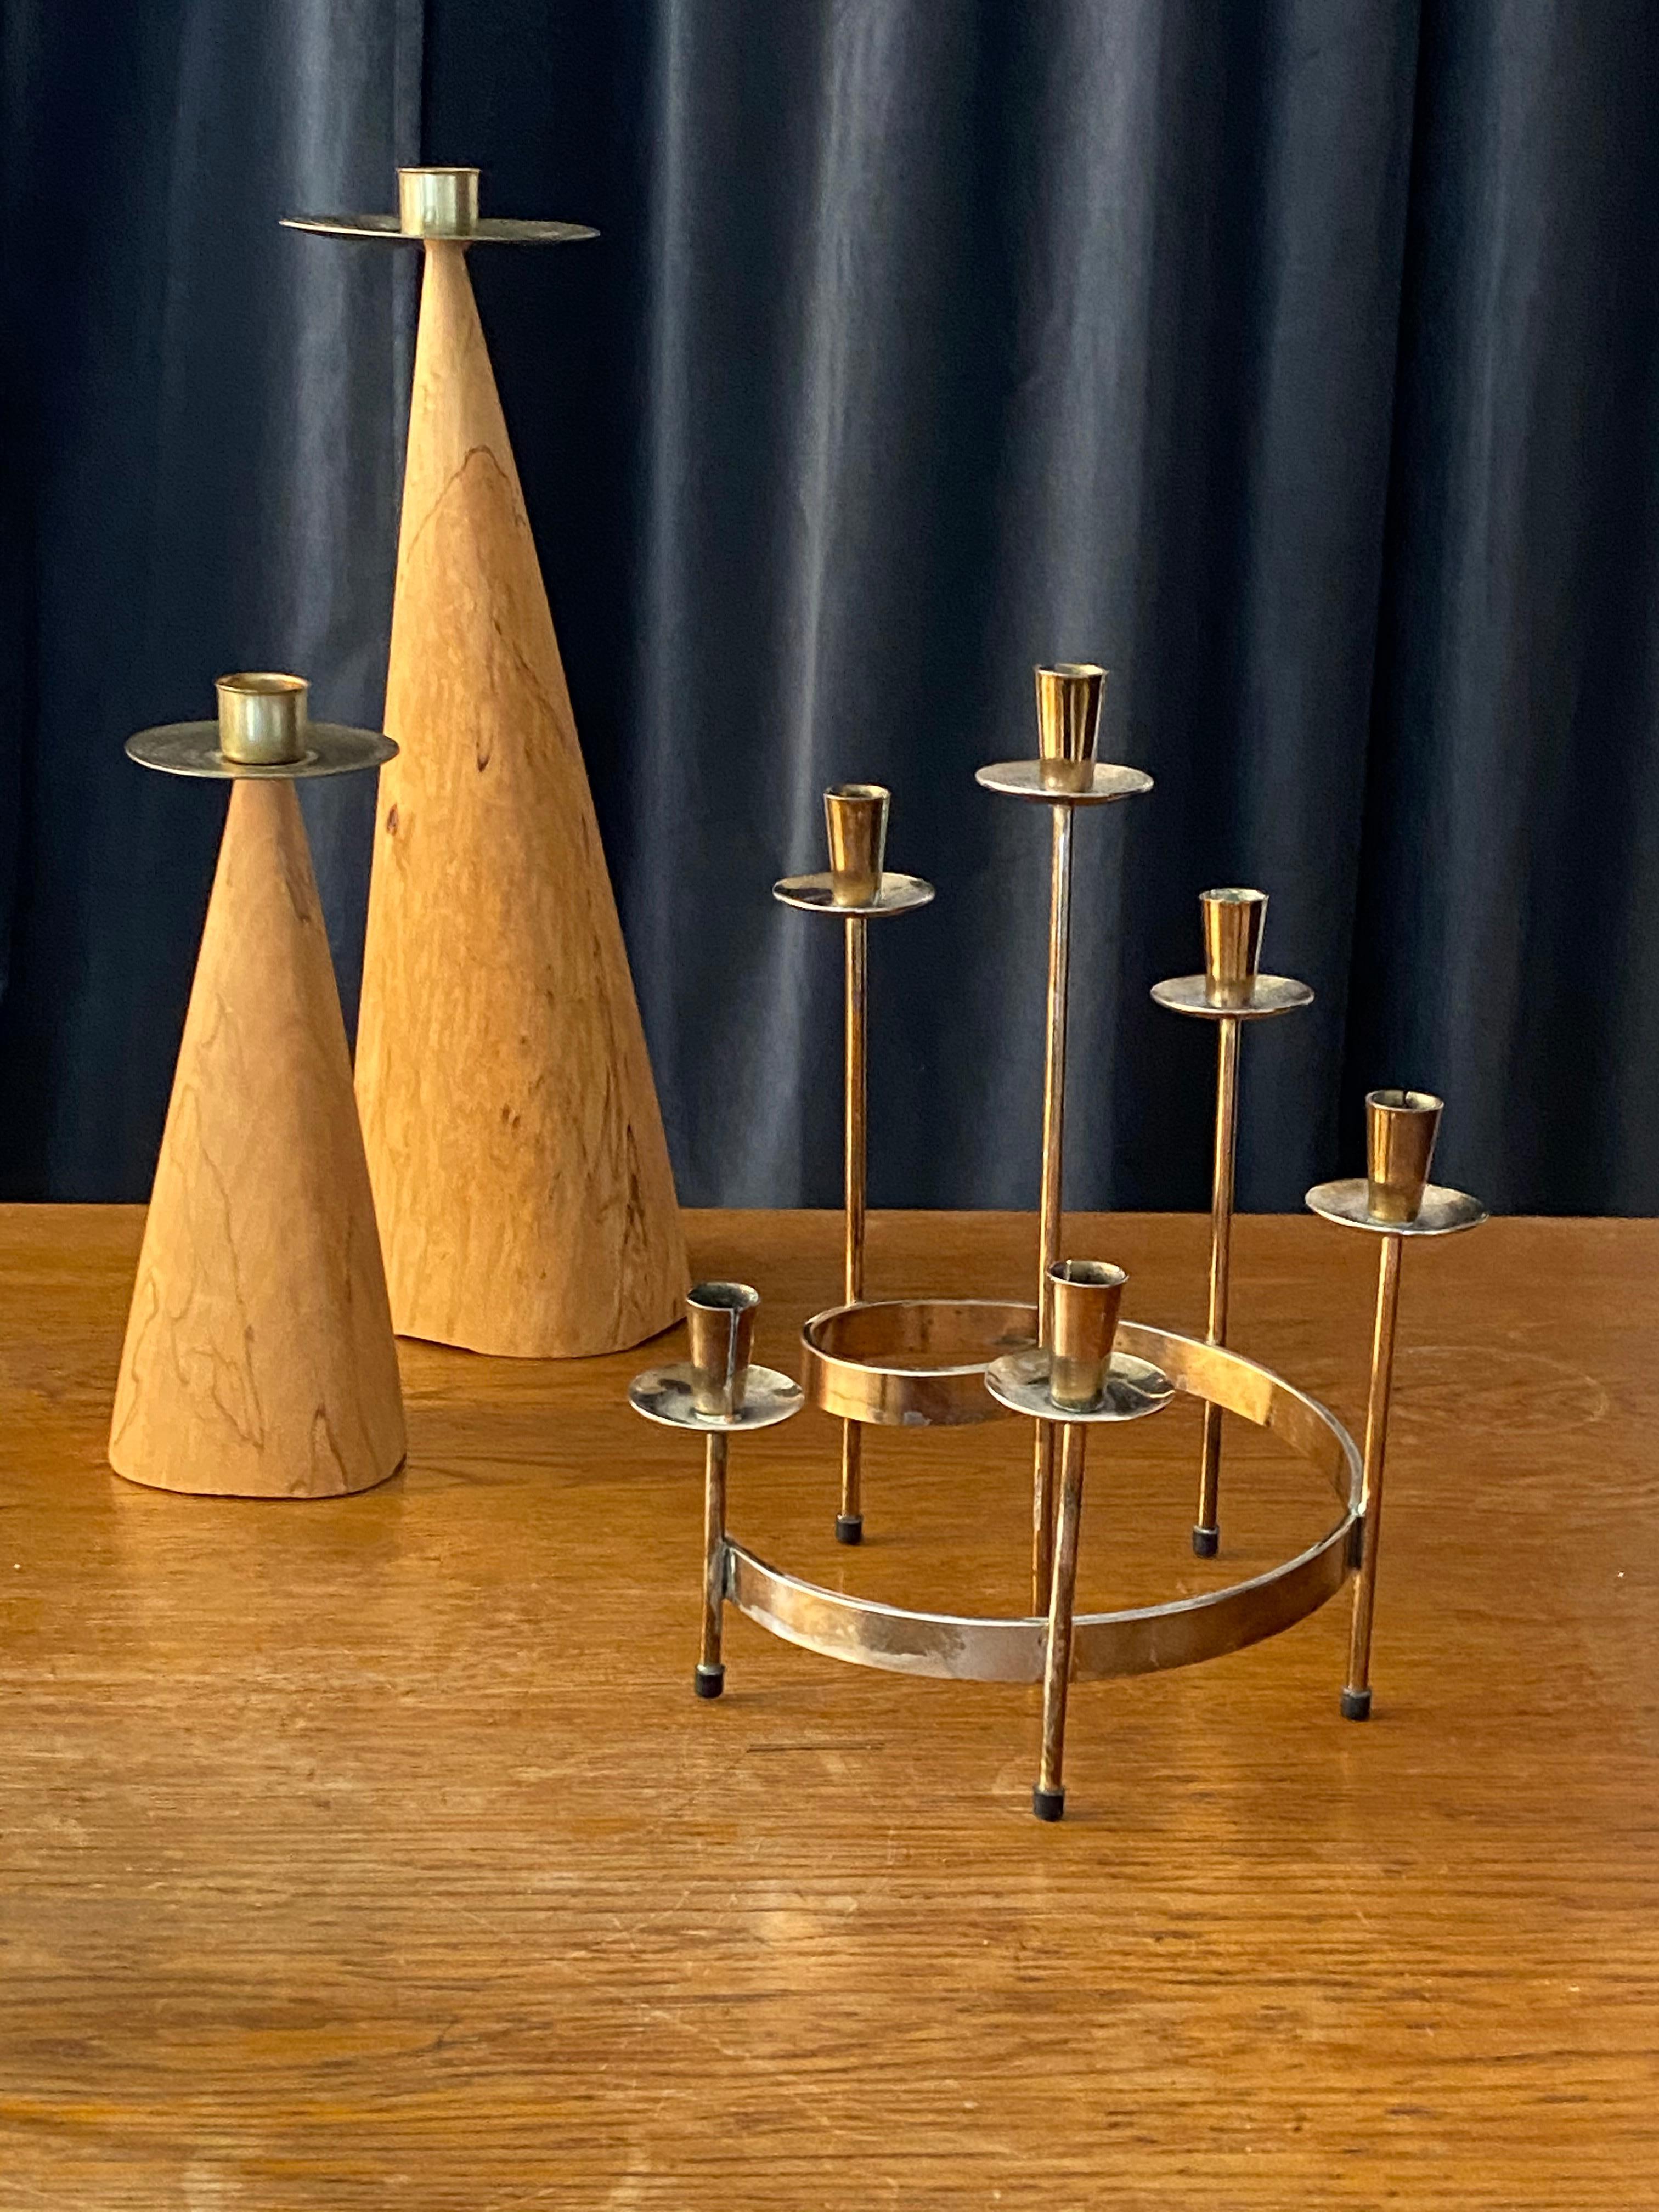 European Swedish Design, Collection of Candlesticks or Candelabra, Wood, Brass, Steel